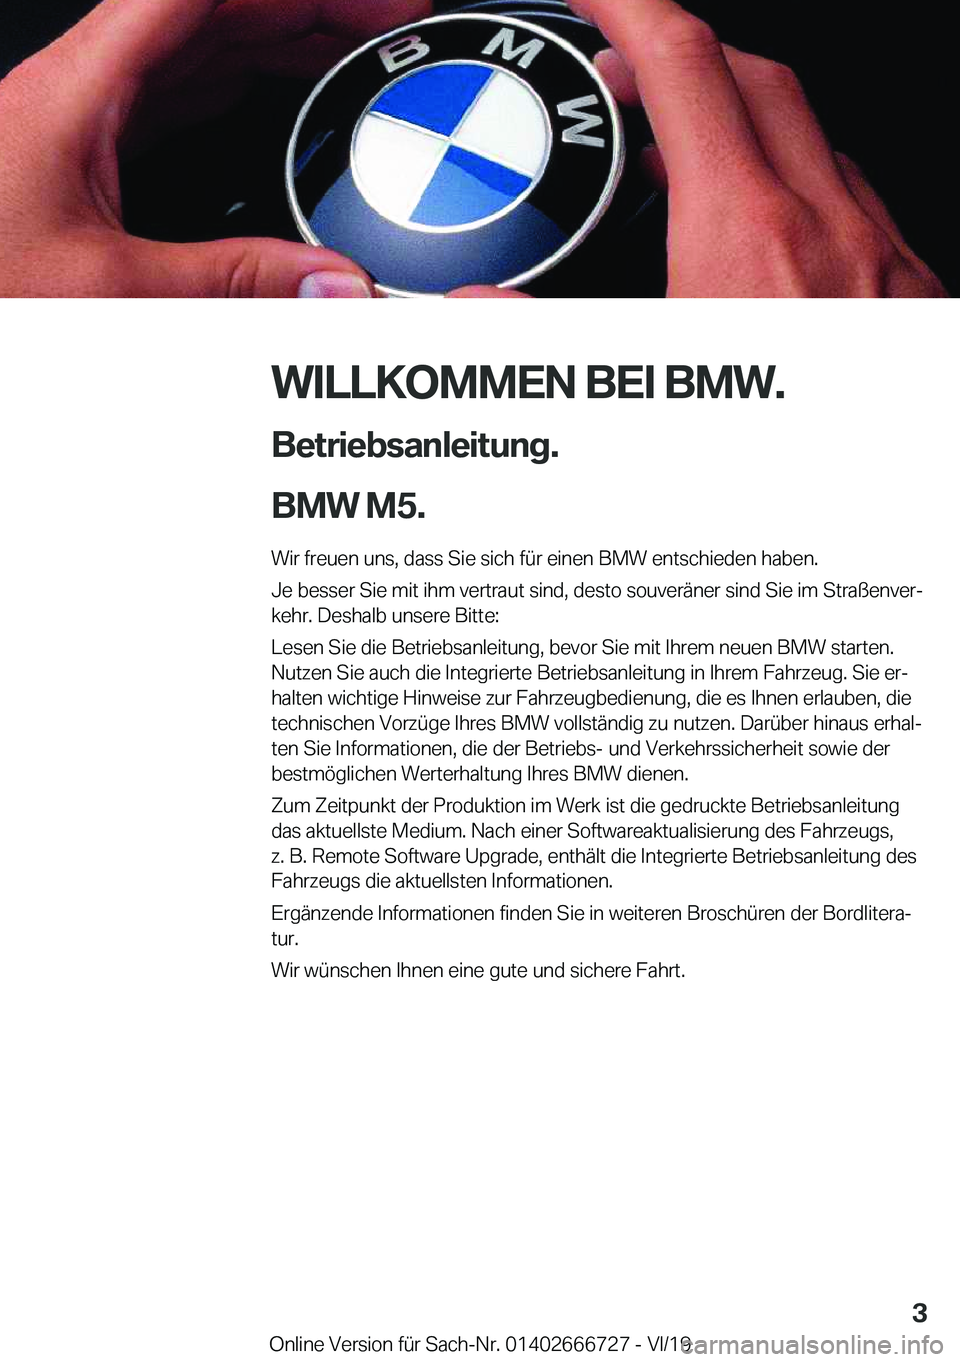 BMW M5 2020  Betriebsanleitungen (in German) �W�I�L�L�K�O�M�M�E�N��B�E�I��B�M�W�.�B�e�t�r�i�e�b�s�a�n�l�e�i�t�u�n�g�.
�B�M�W��M�5�. �W�i�r��f�r�e�u�e�n��u�n�s�,��d�a�s�s��S�i�e��s�i�c�h��f�